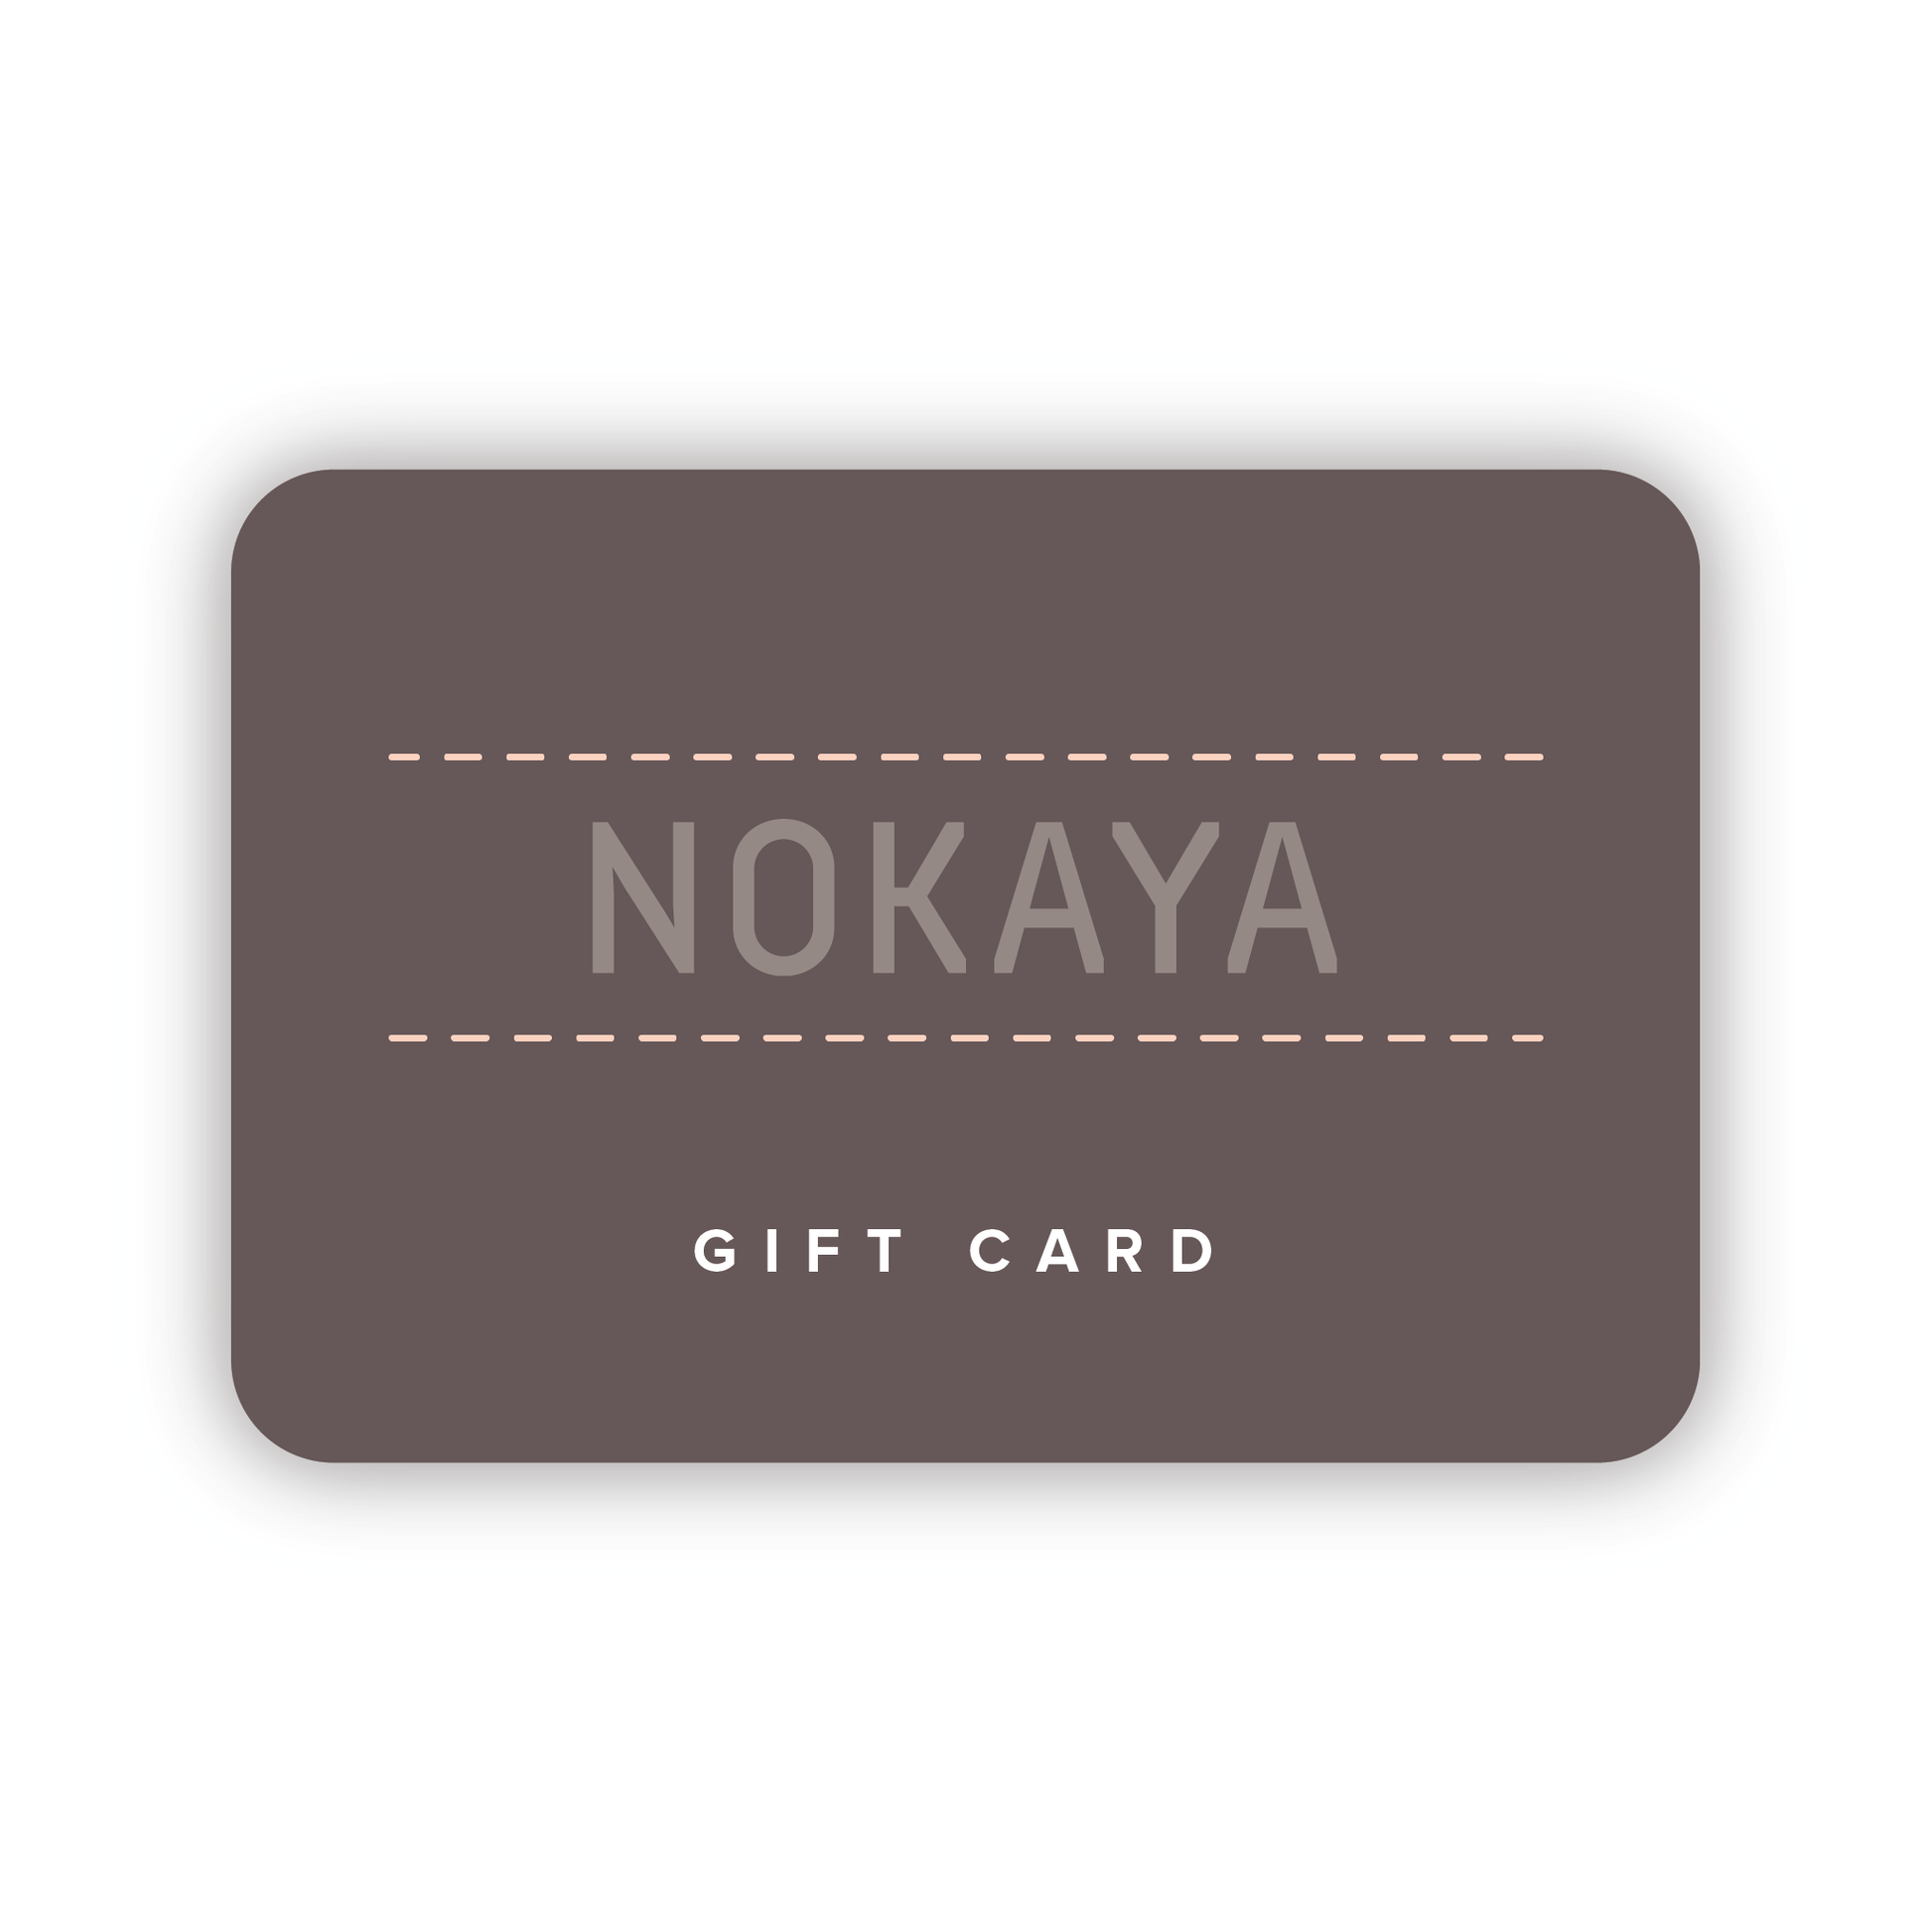 NOKAYA GIFT CARD delivered by email